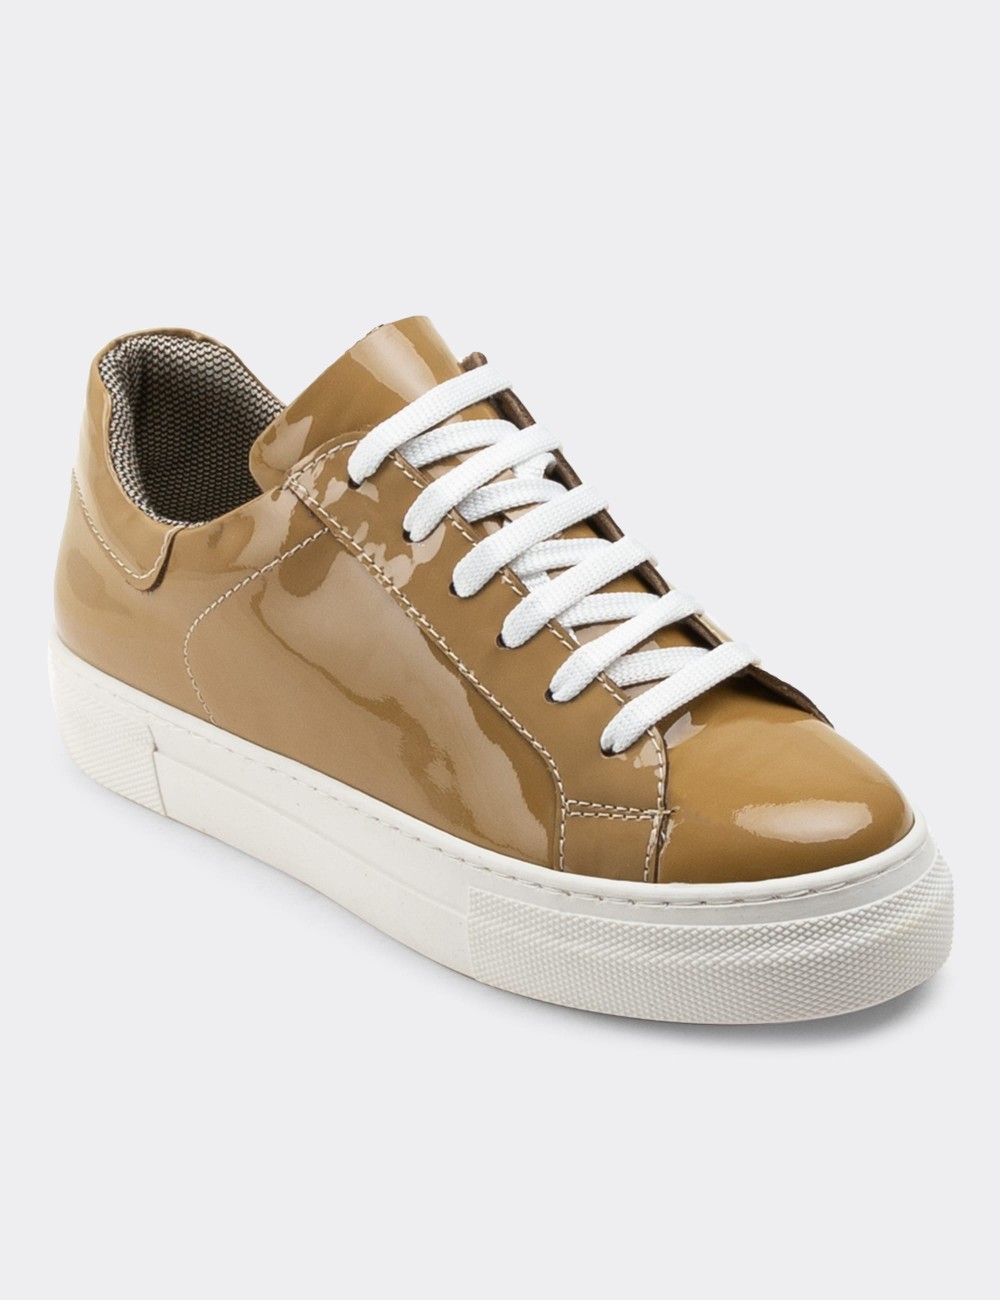 Sandstone Patent Leather Sneakers - Z1681ZVZNC02